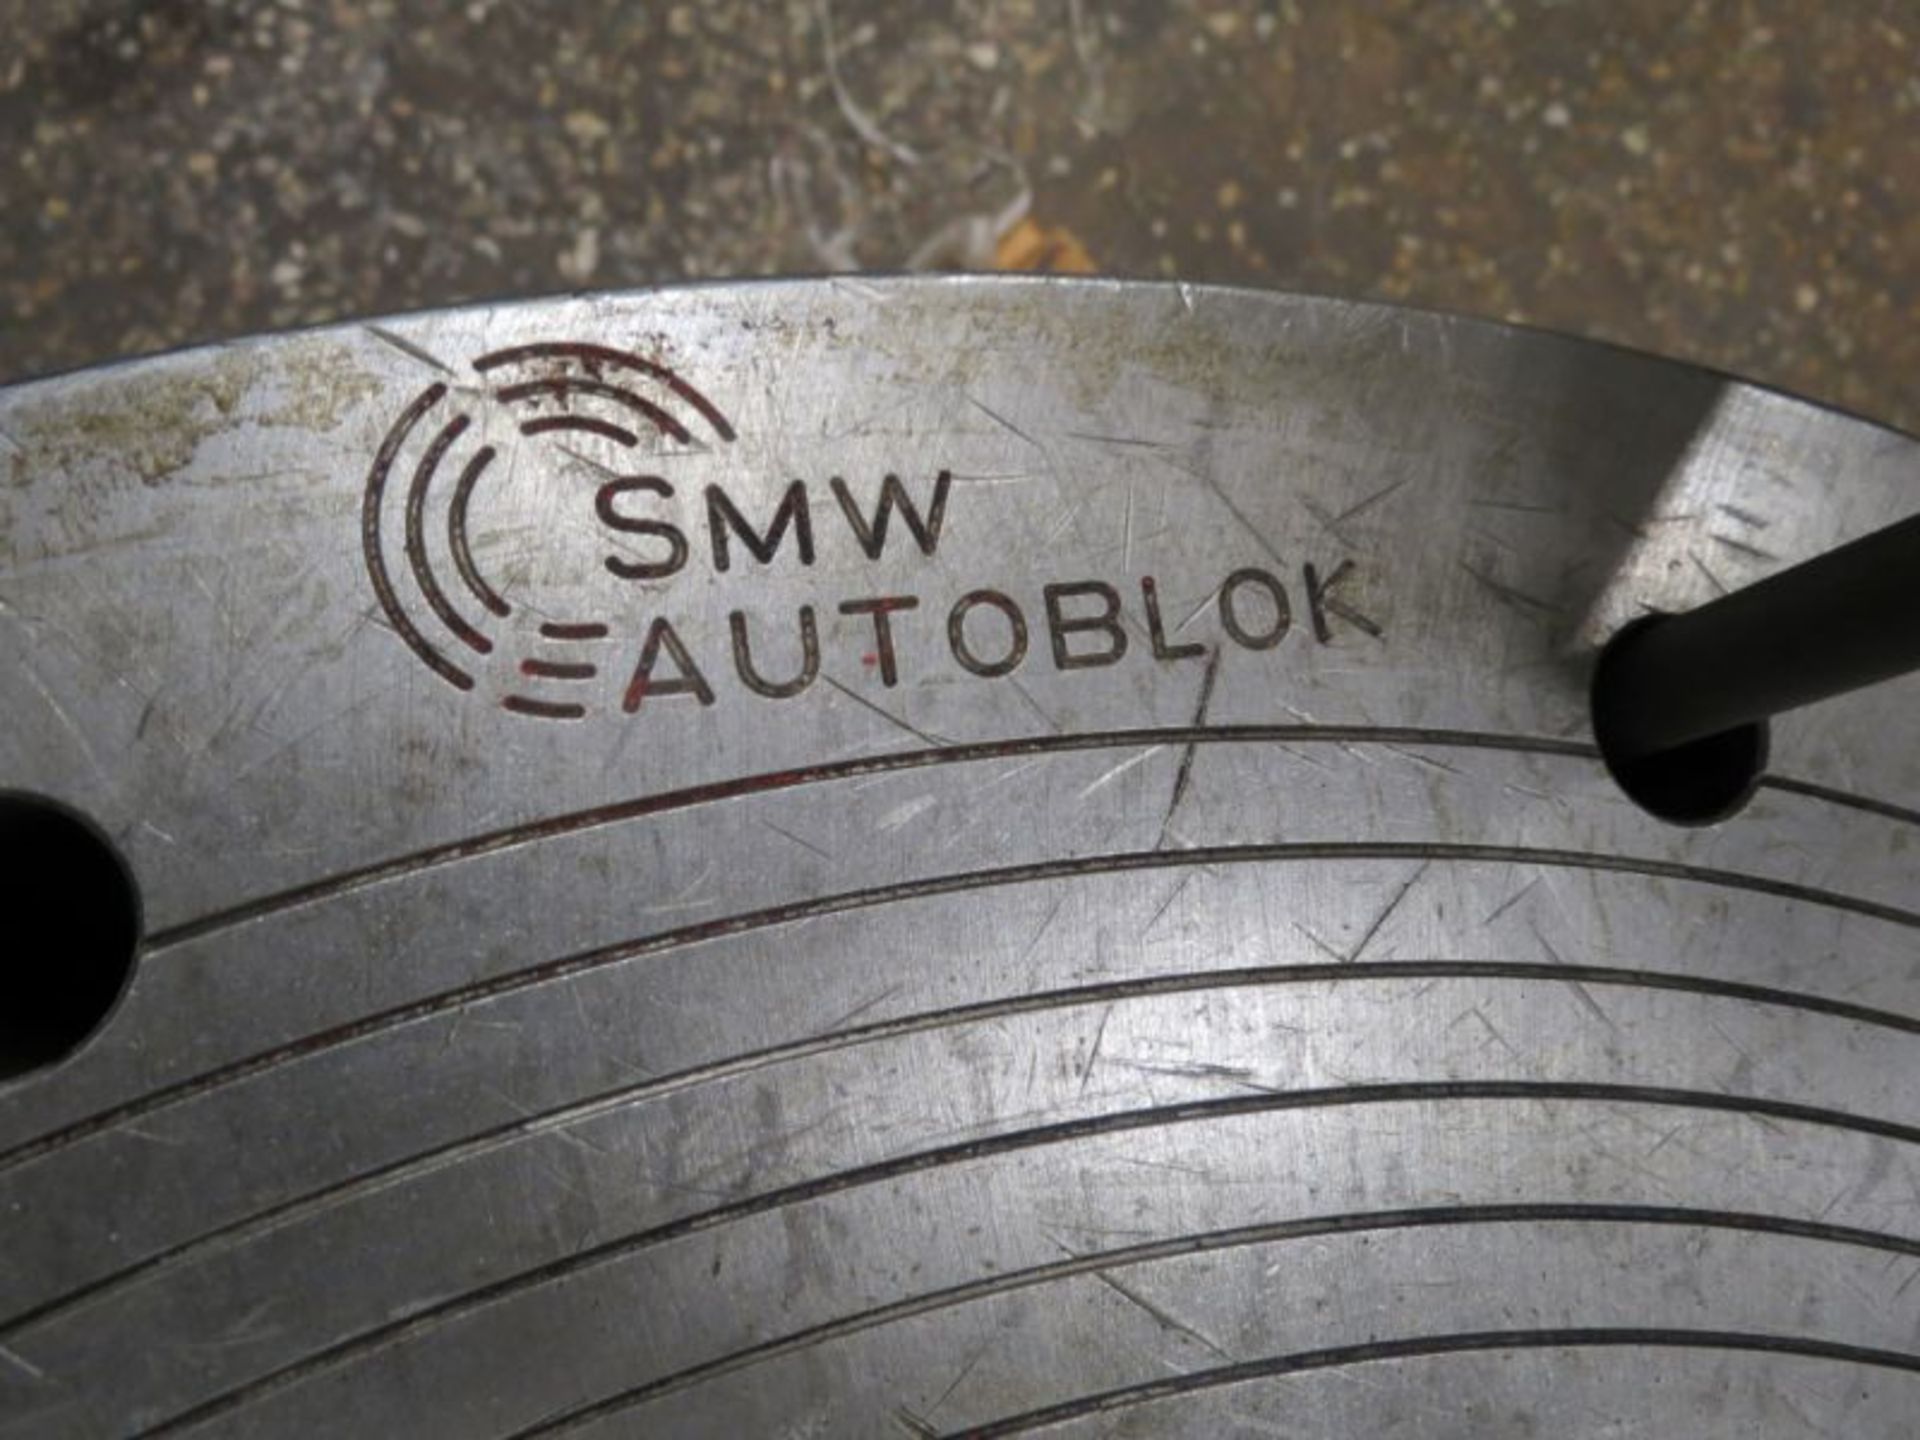 SMW Auto Block Big Bore 33" hydraulic Chuck 3 jaw 15" Through Hole s/n:1006 - Image 6 of 6